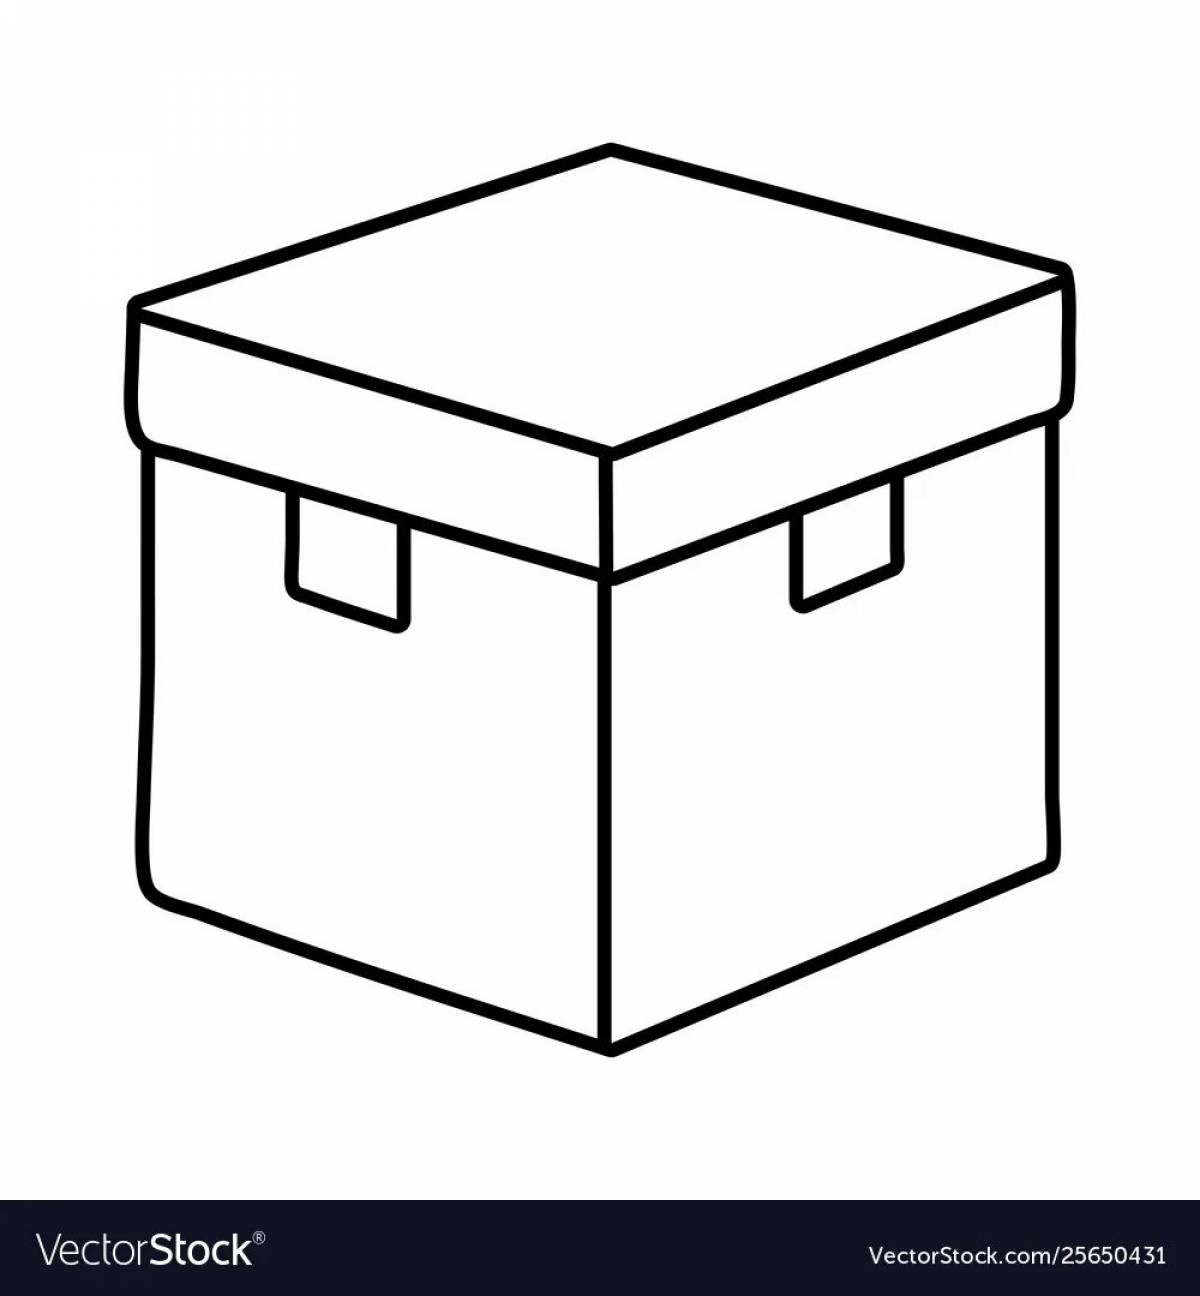 Box#1